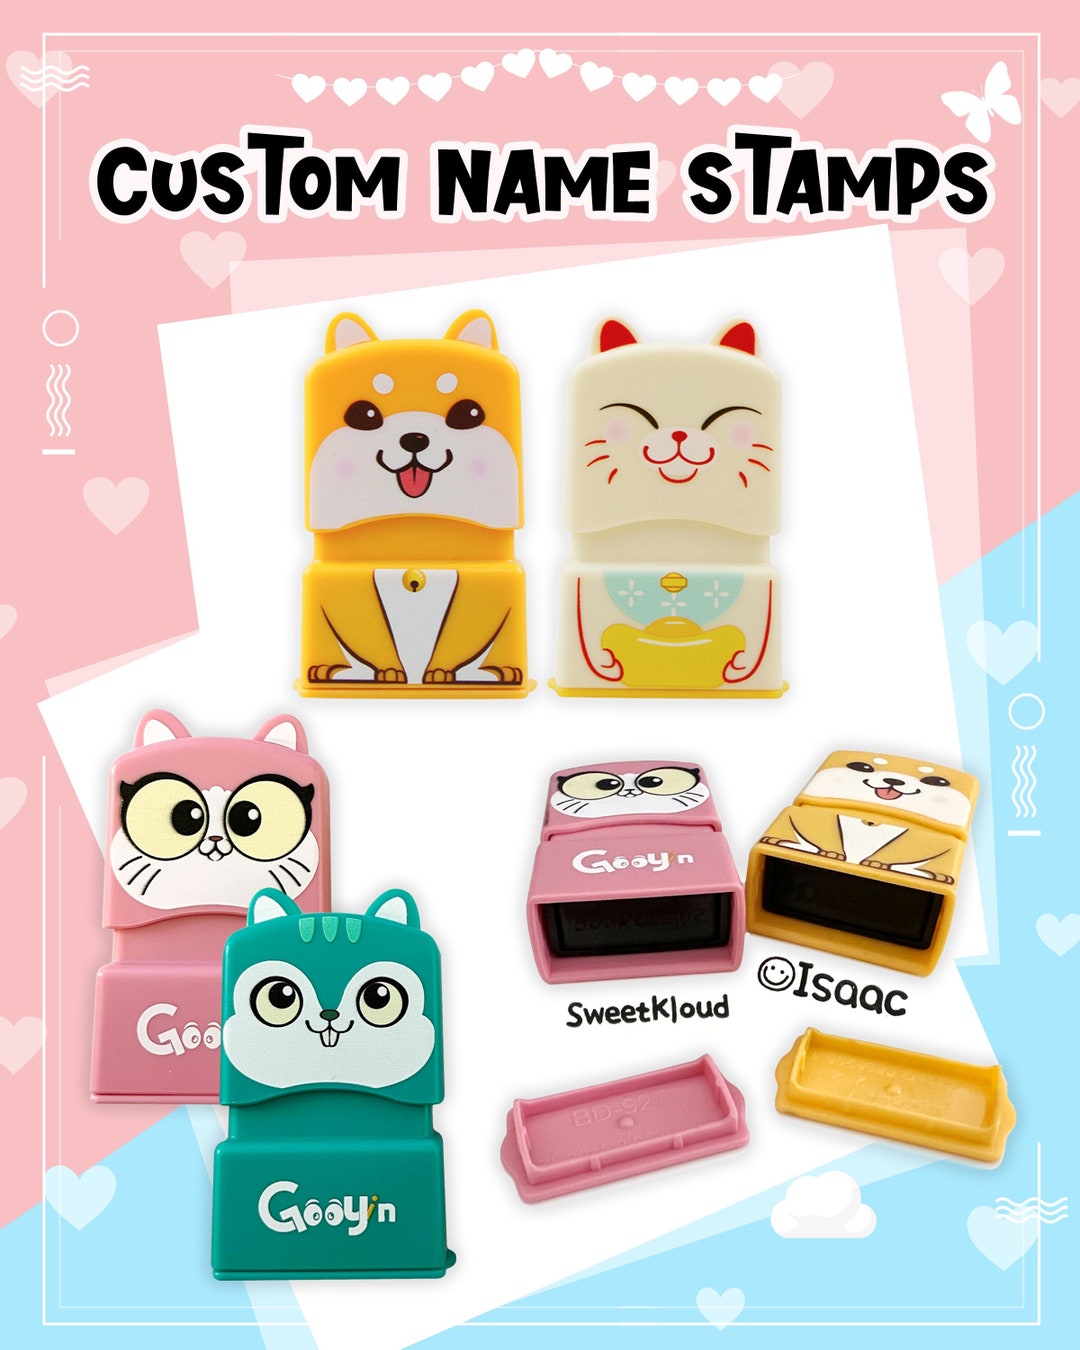 Custom Name Stamp, Stamp Name, Name Stamp for Clothing, Kids Stamp,  Children Name Stamp, Personalized Stamp, Personalized Gift, Cute Stamps 